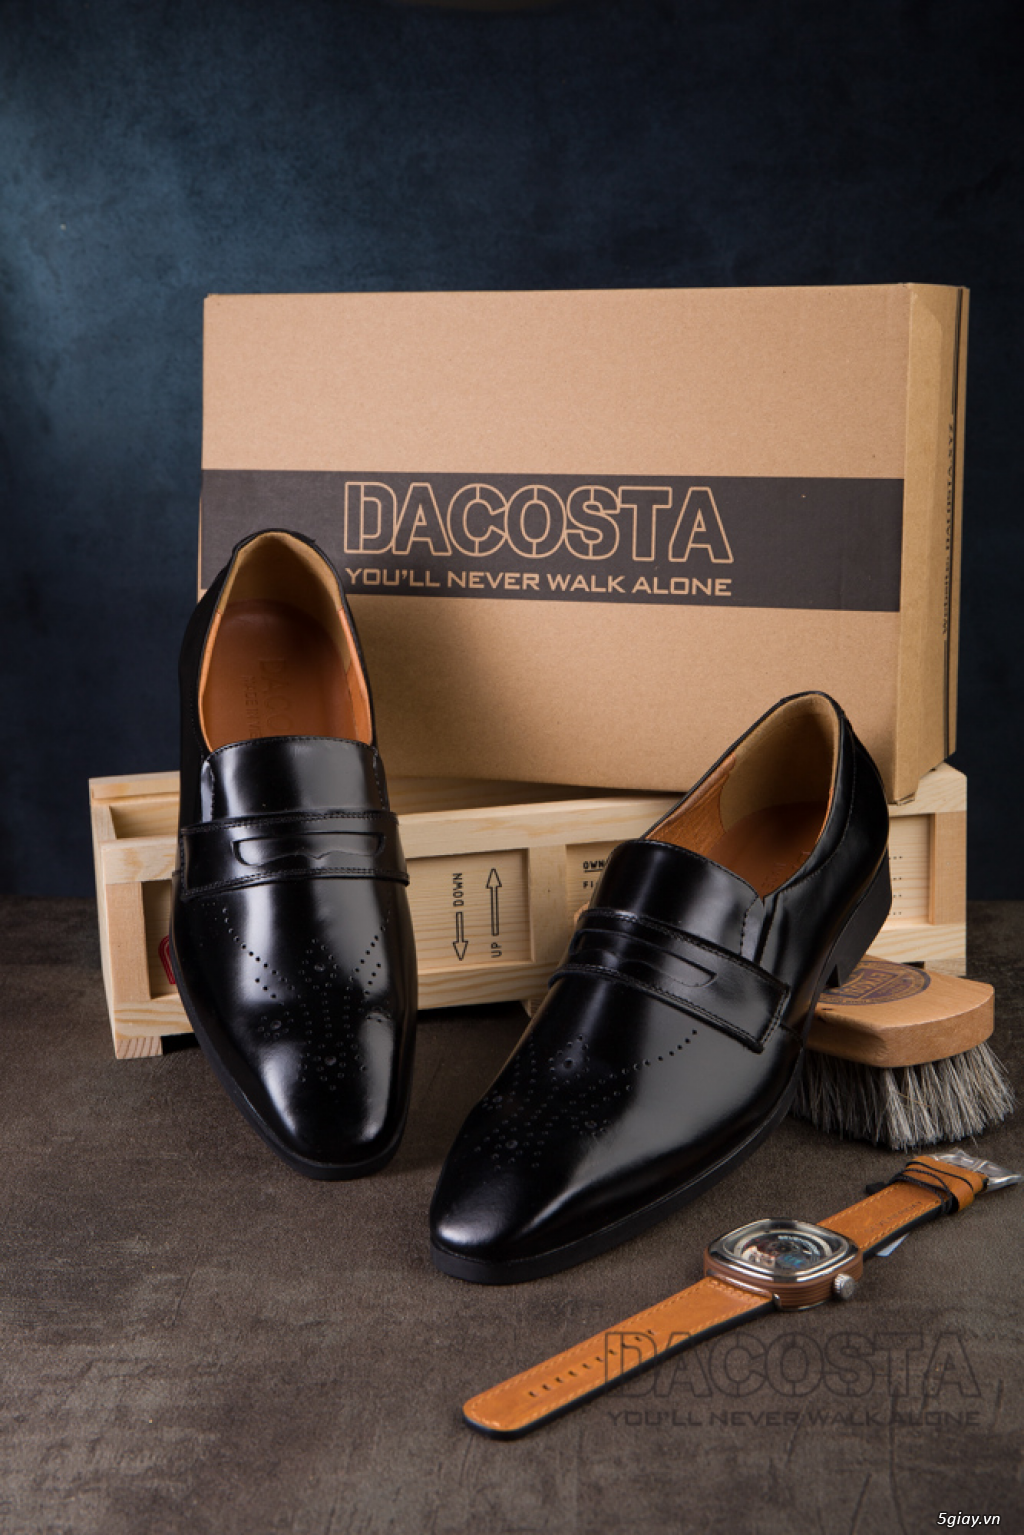 Tiệm Giày Dacosta - Những Mẫu Giày Tây Nam Loafer Hot Nhất 2019 - 23